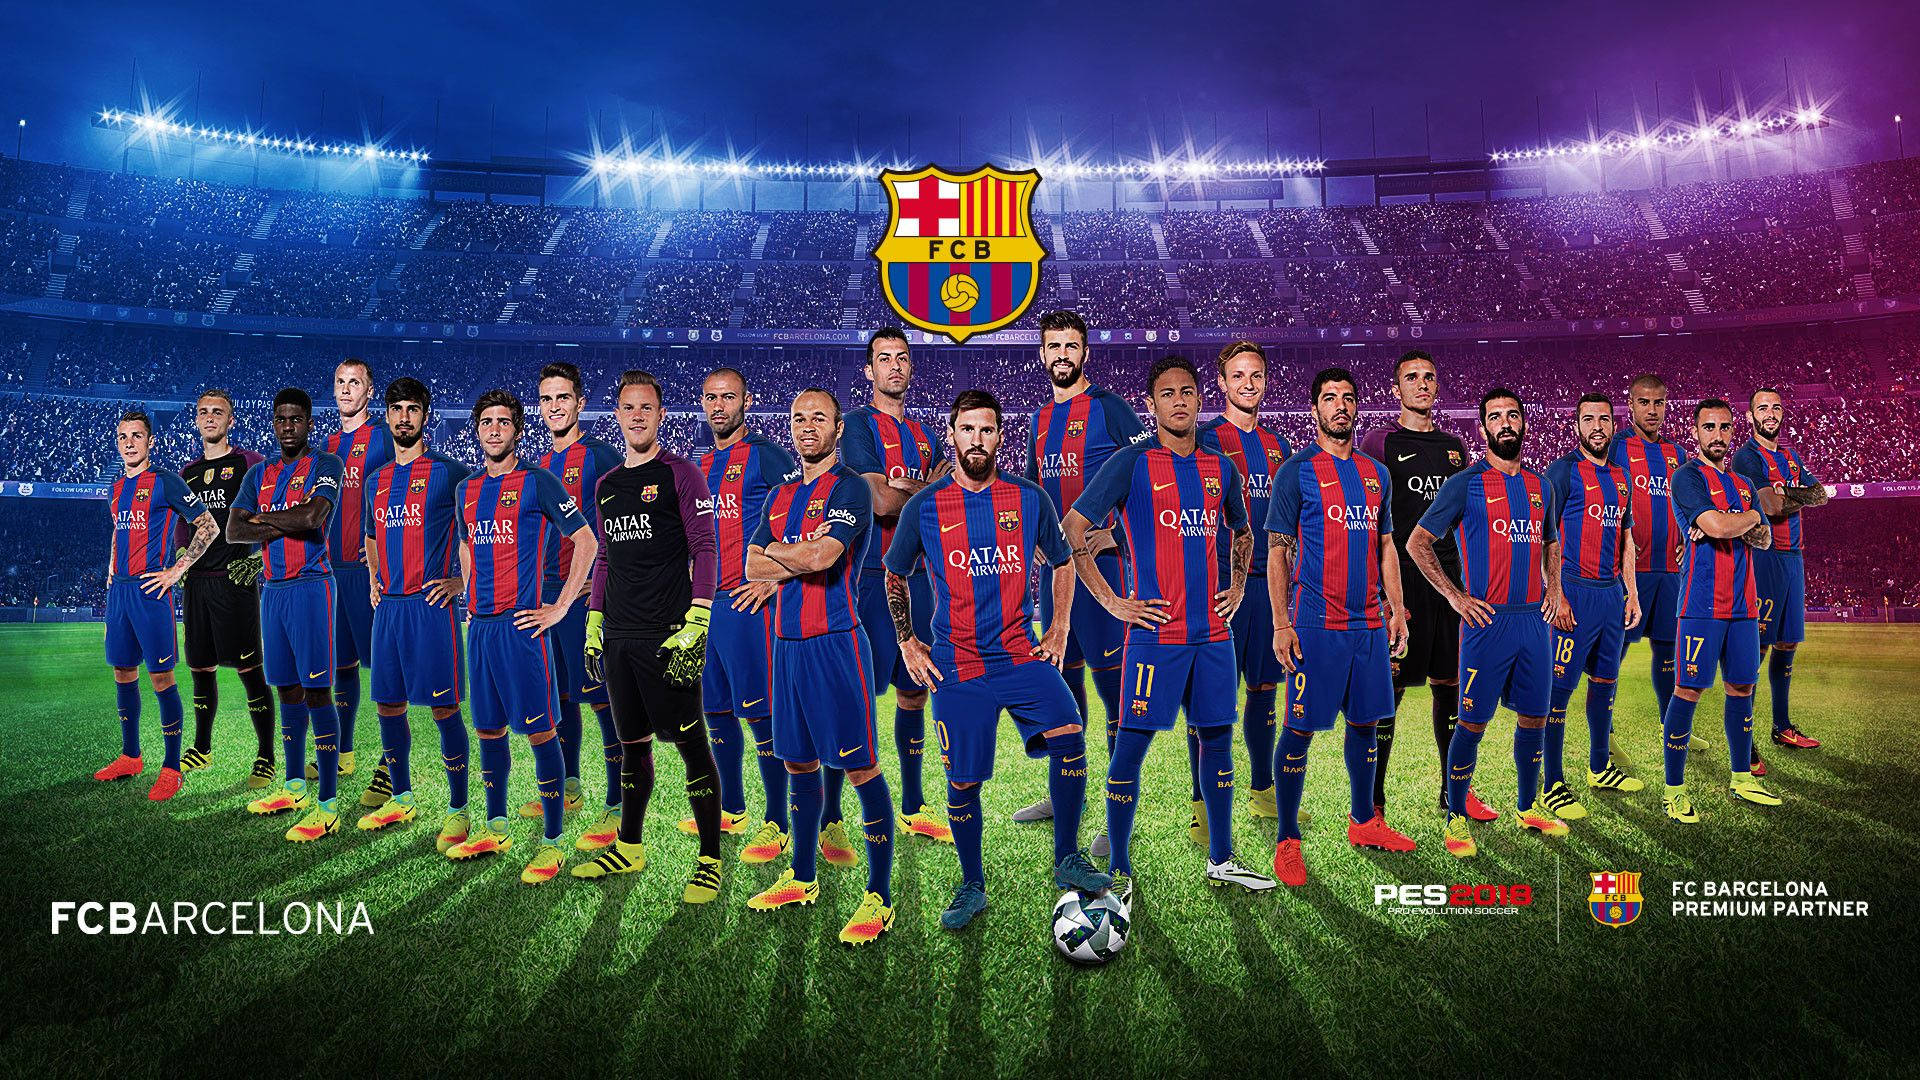 Fifa World Cup FC Barcelona Team Wallpaper